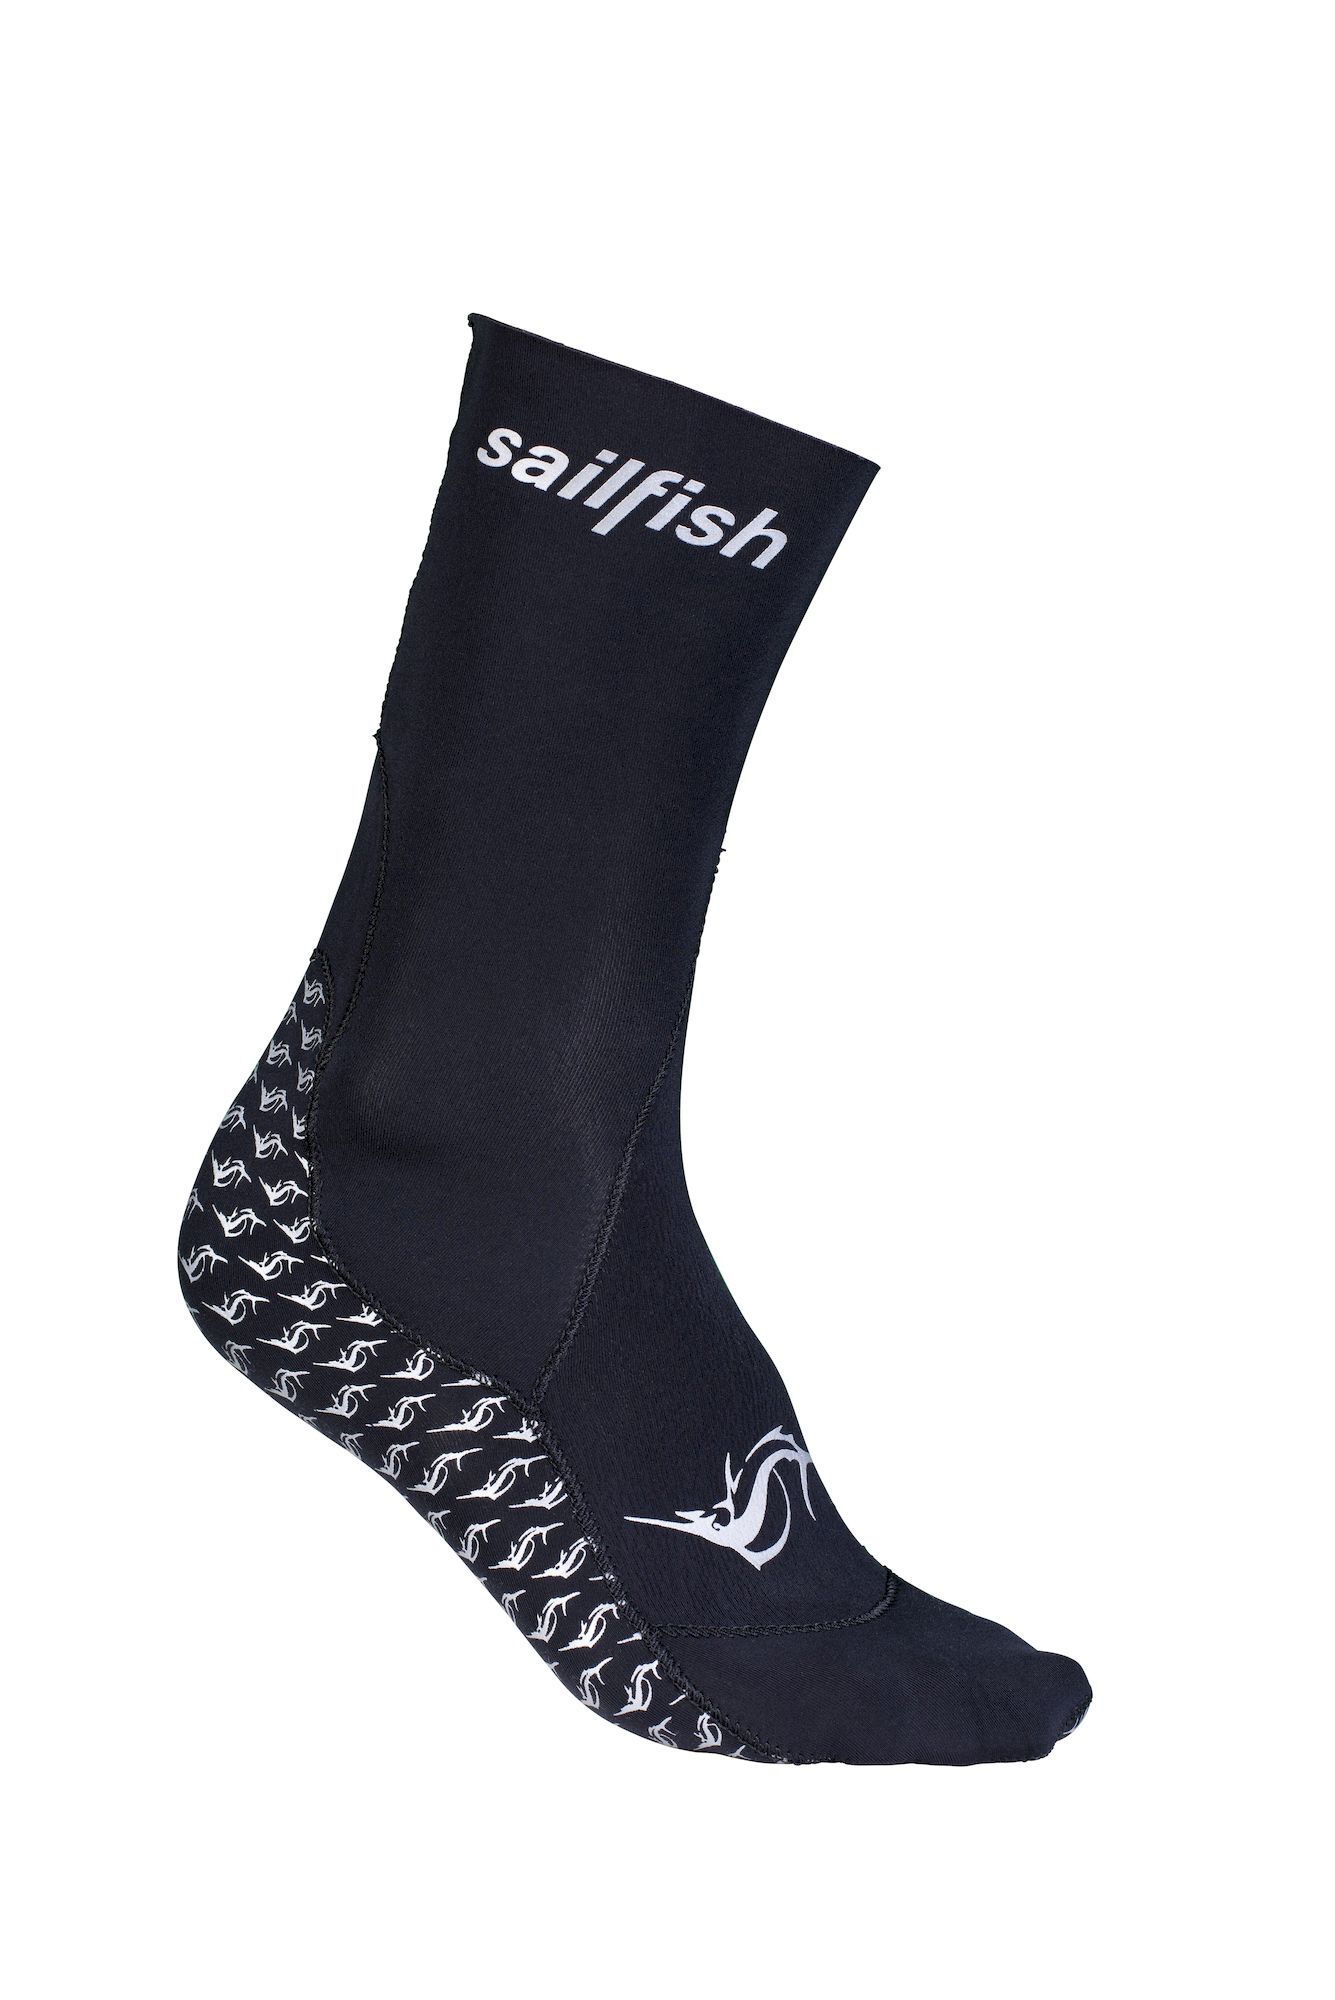 Sailfish Neoprene Socks - Neopreenitossut | Hardloop